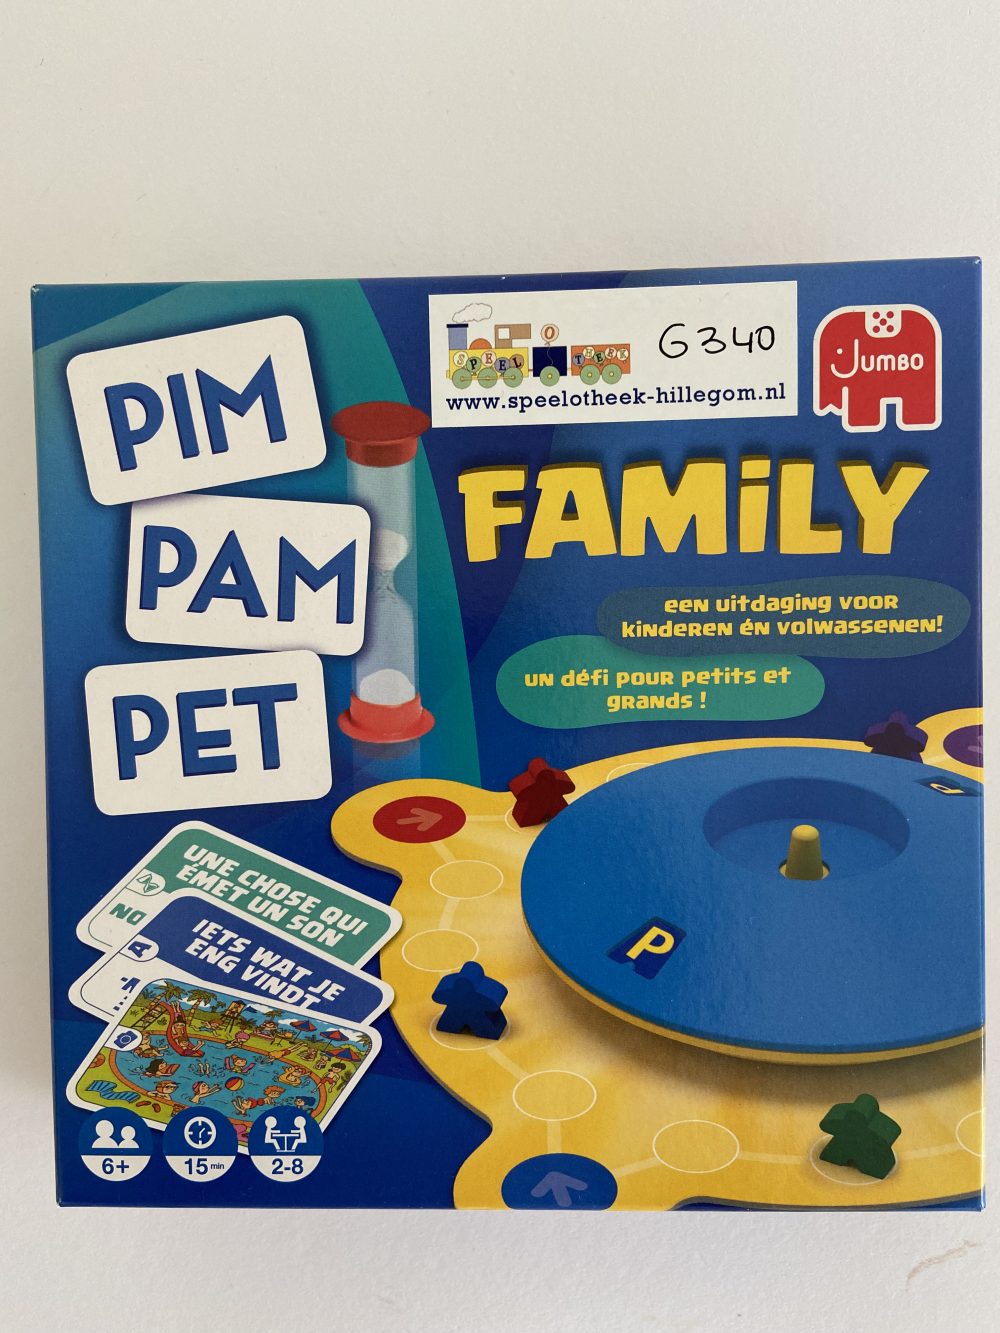 Pim Pam Pet Family